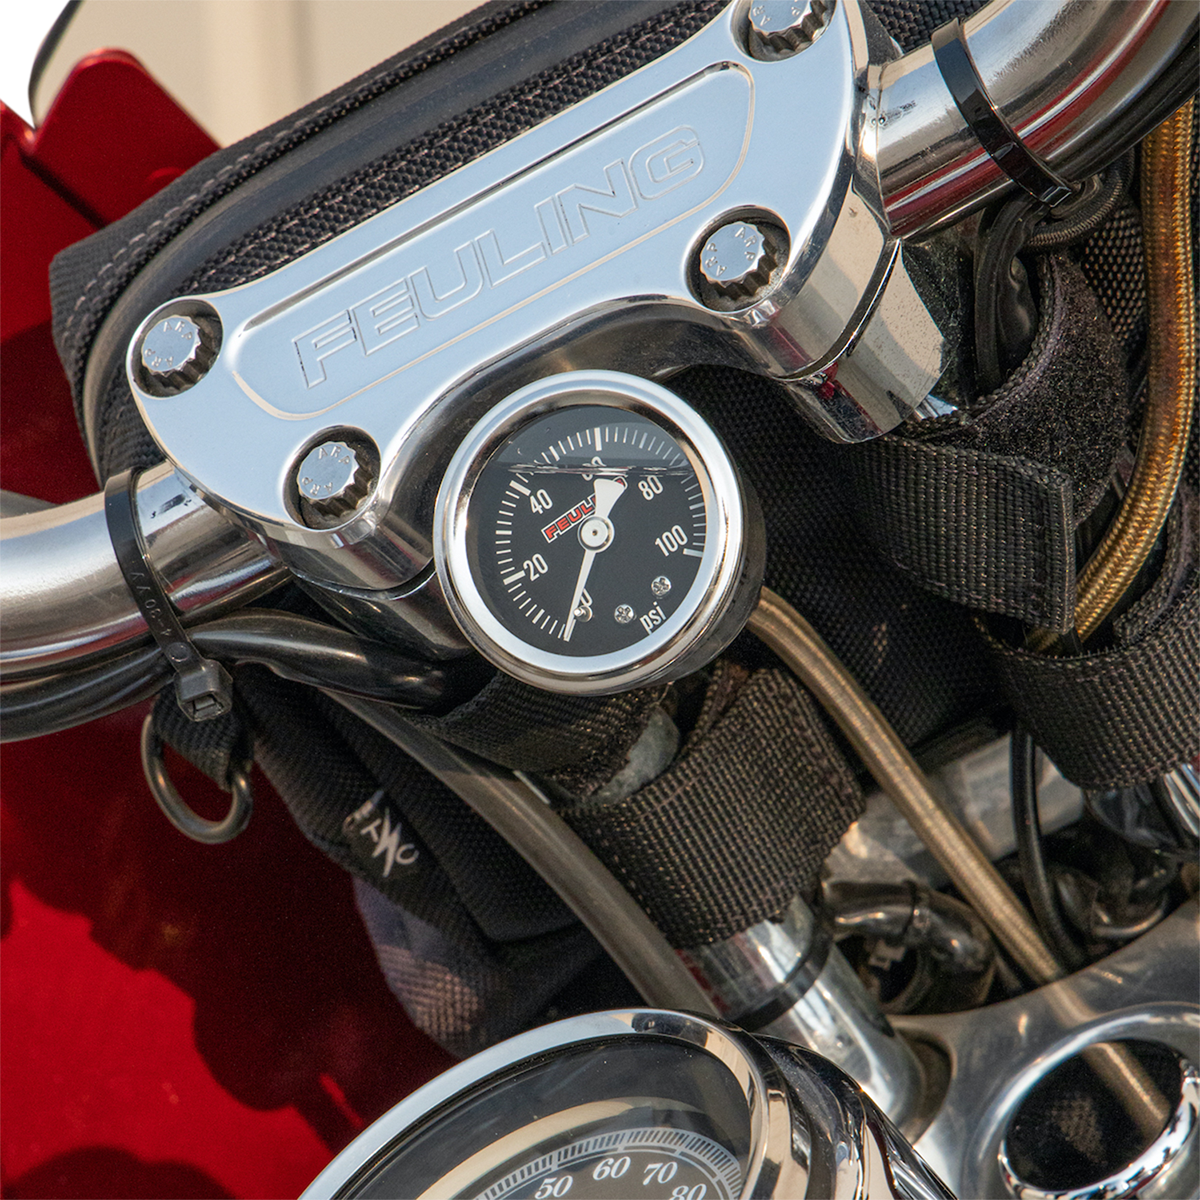 Feuling Chrome Handlebar Oil Pressure Gauge Kit for Harley Davidson M8 Models